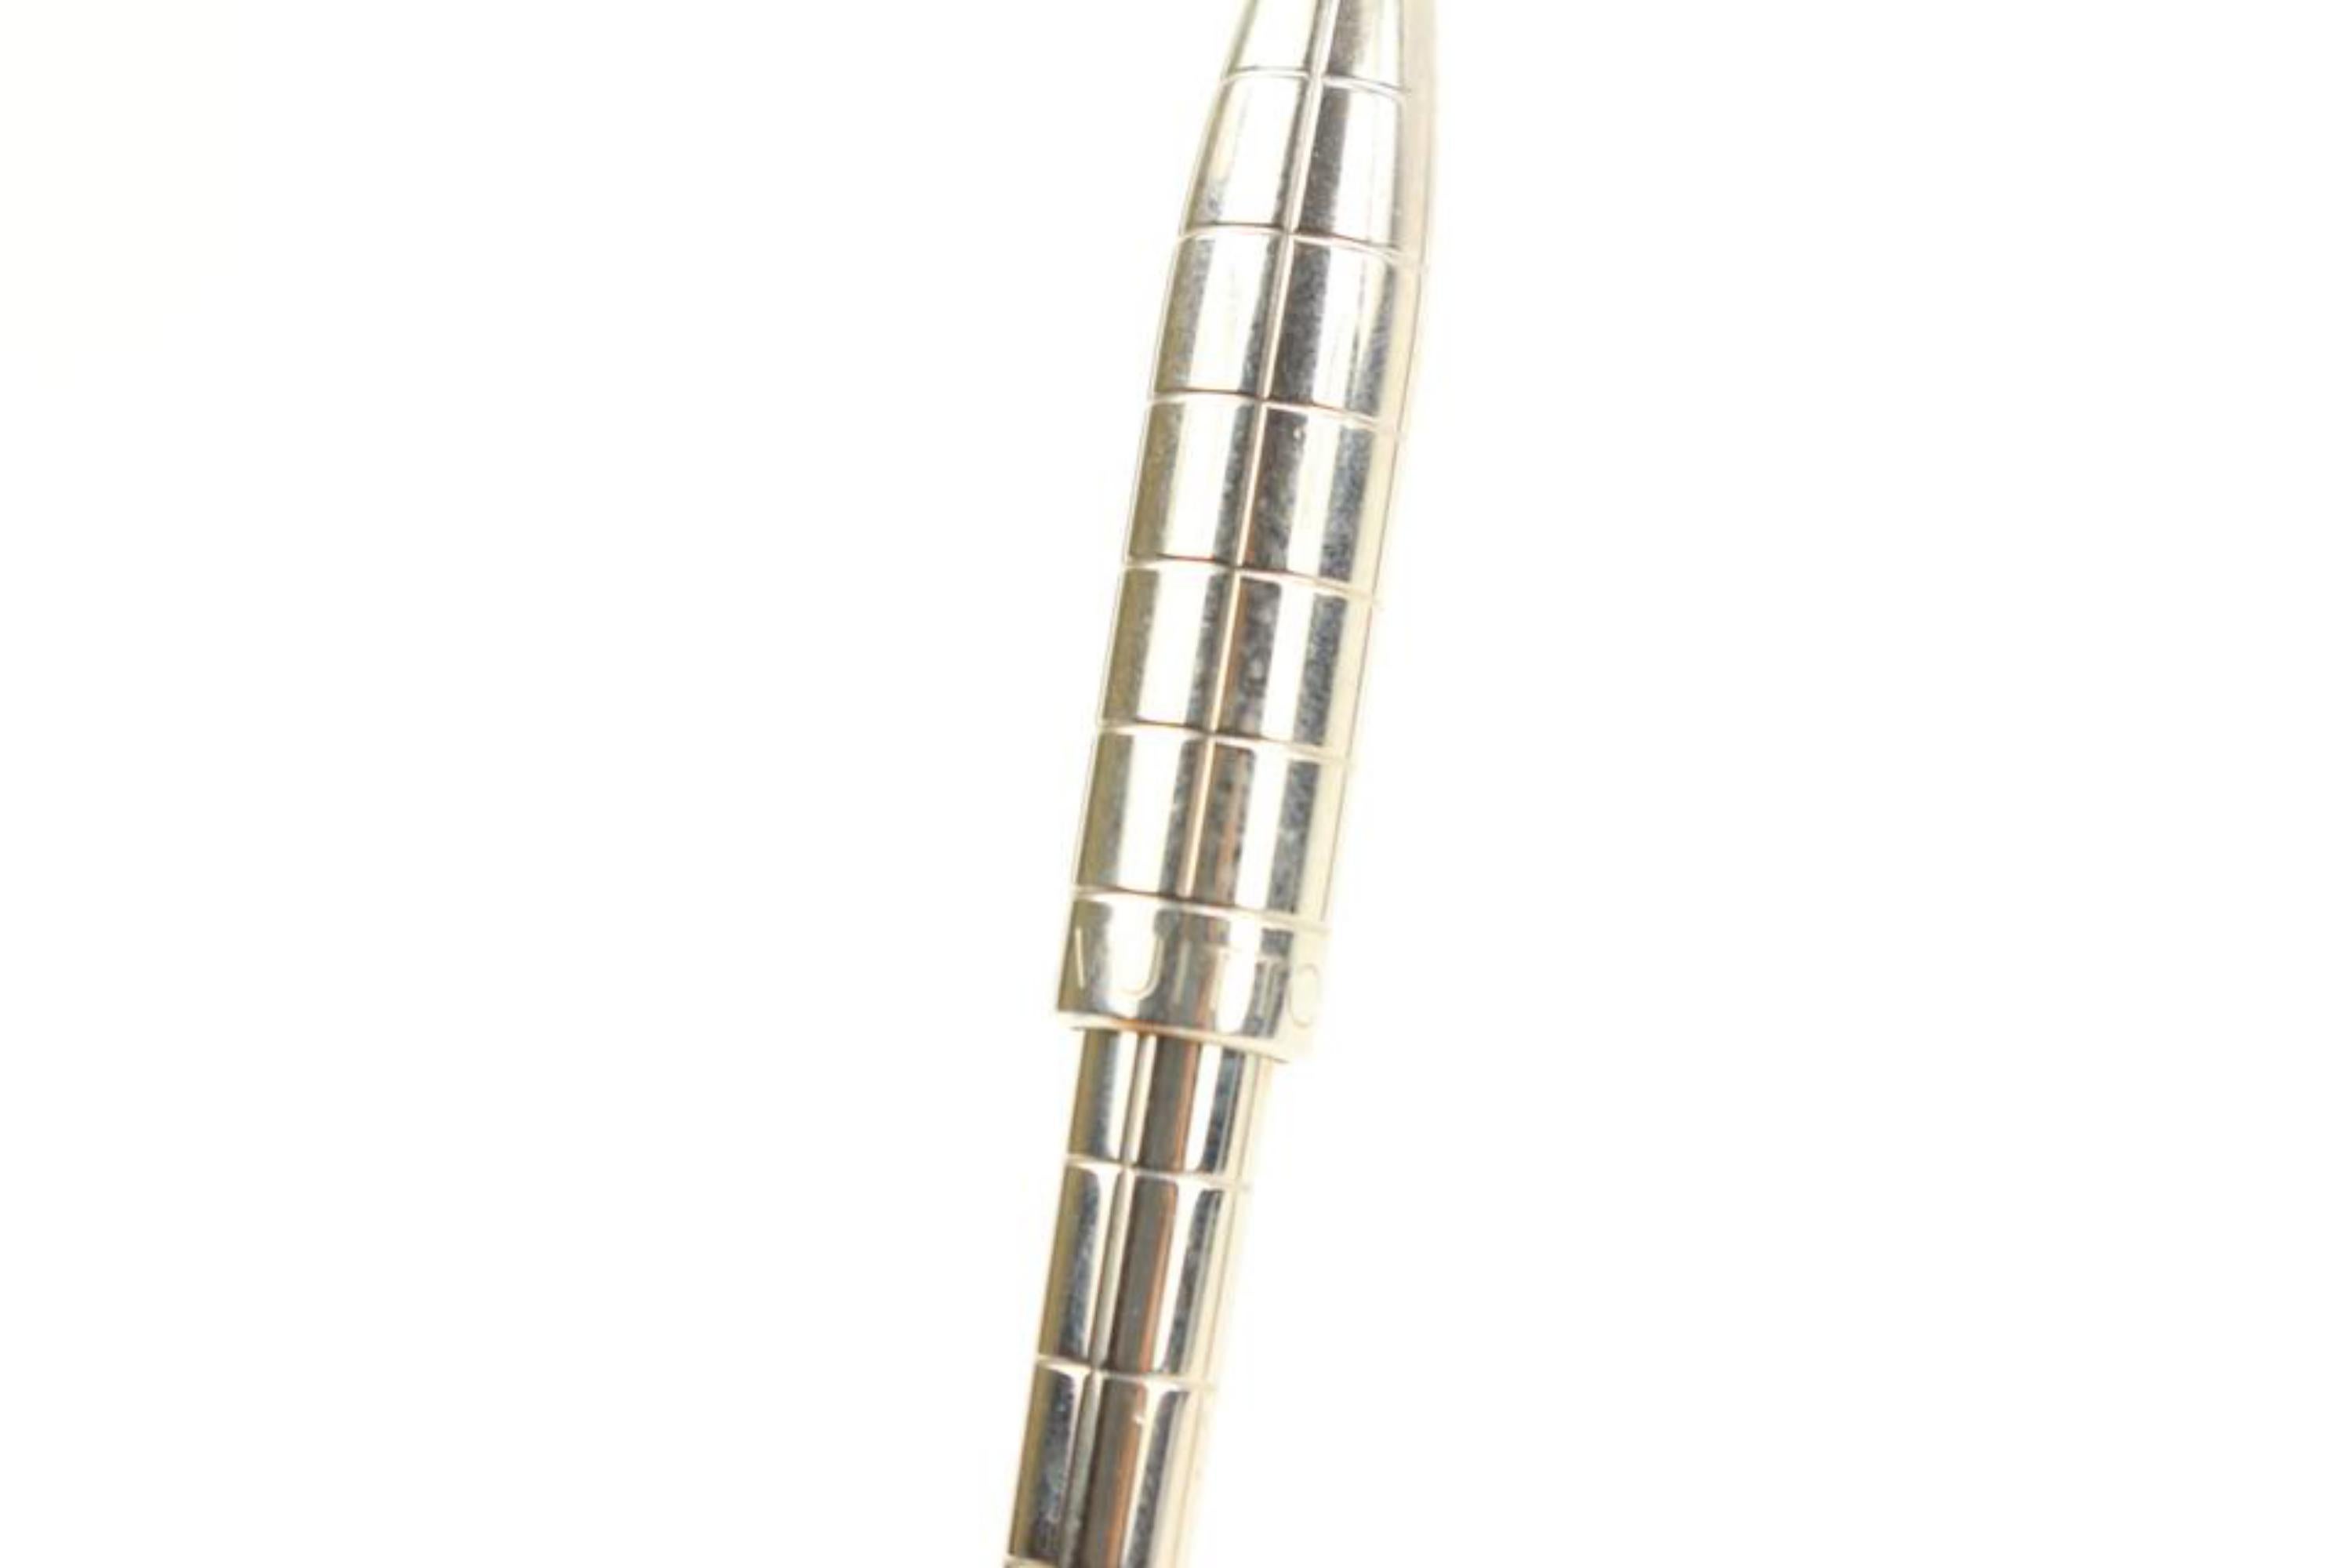 Louis Vuitton Silver Tone Ball Point Stylo Pen gret for Agenda  s214lv86 2